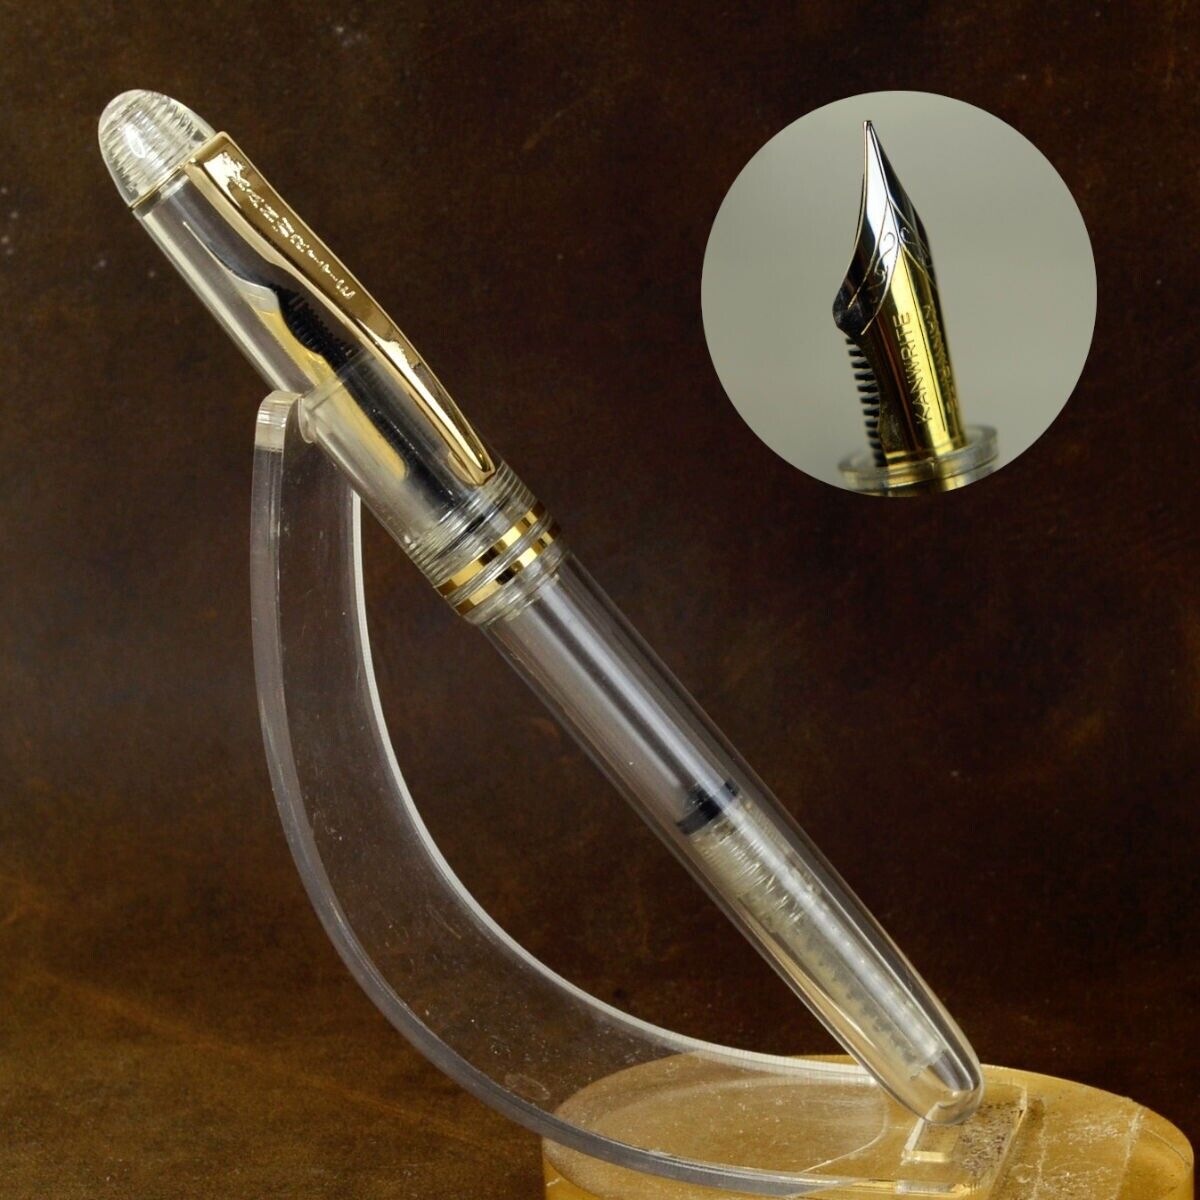 Kanwrite desire 3-in-1 demonstrator fountain pen with full flex dualtone M nib